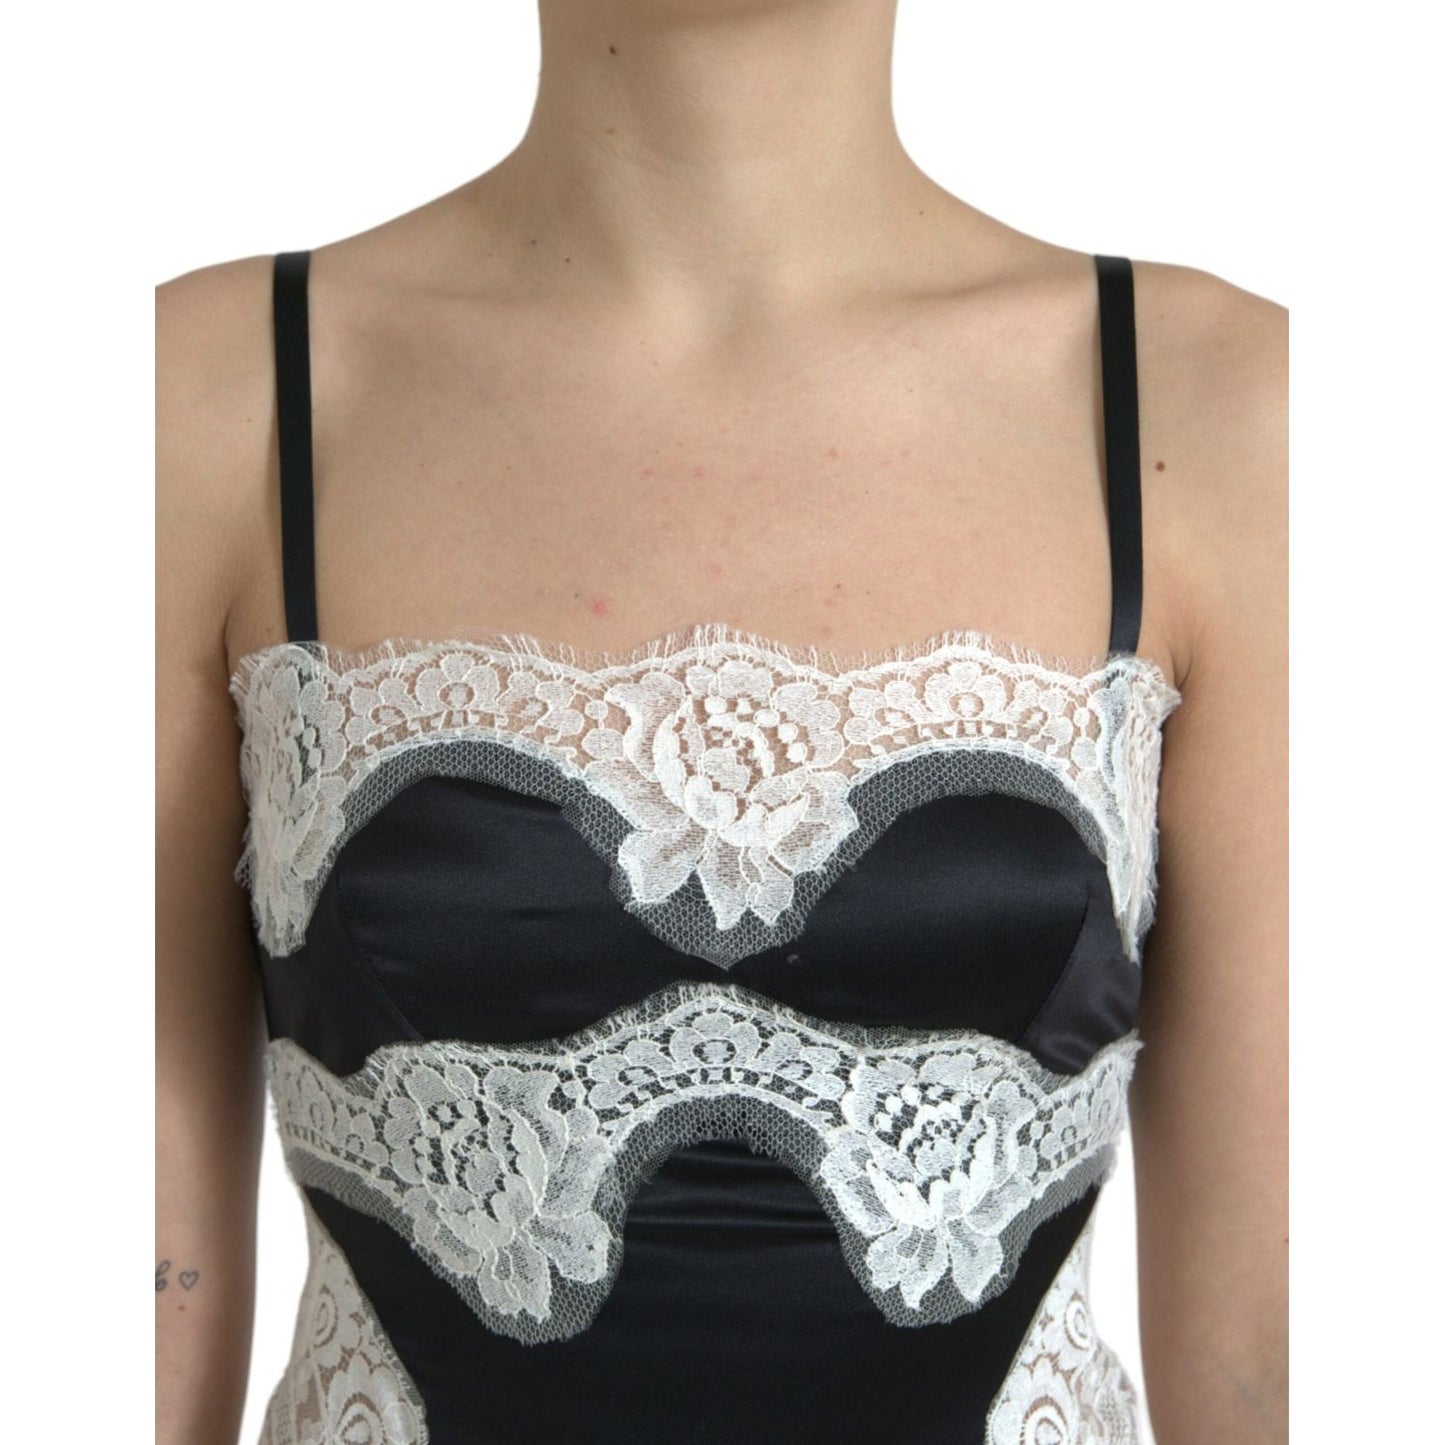 Dolce & Gabbana Elegant Silk Blend A-Line Lace Dress black-white-lace-see-through-a-line-sleeveless-dress